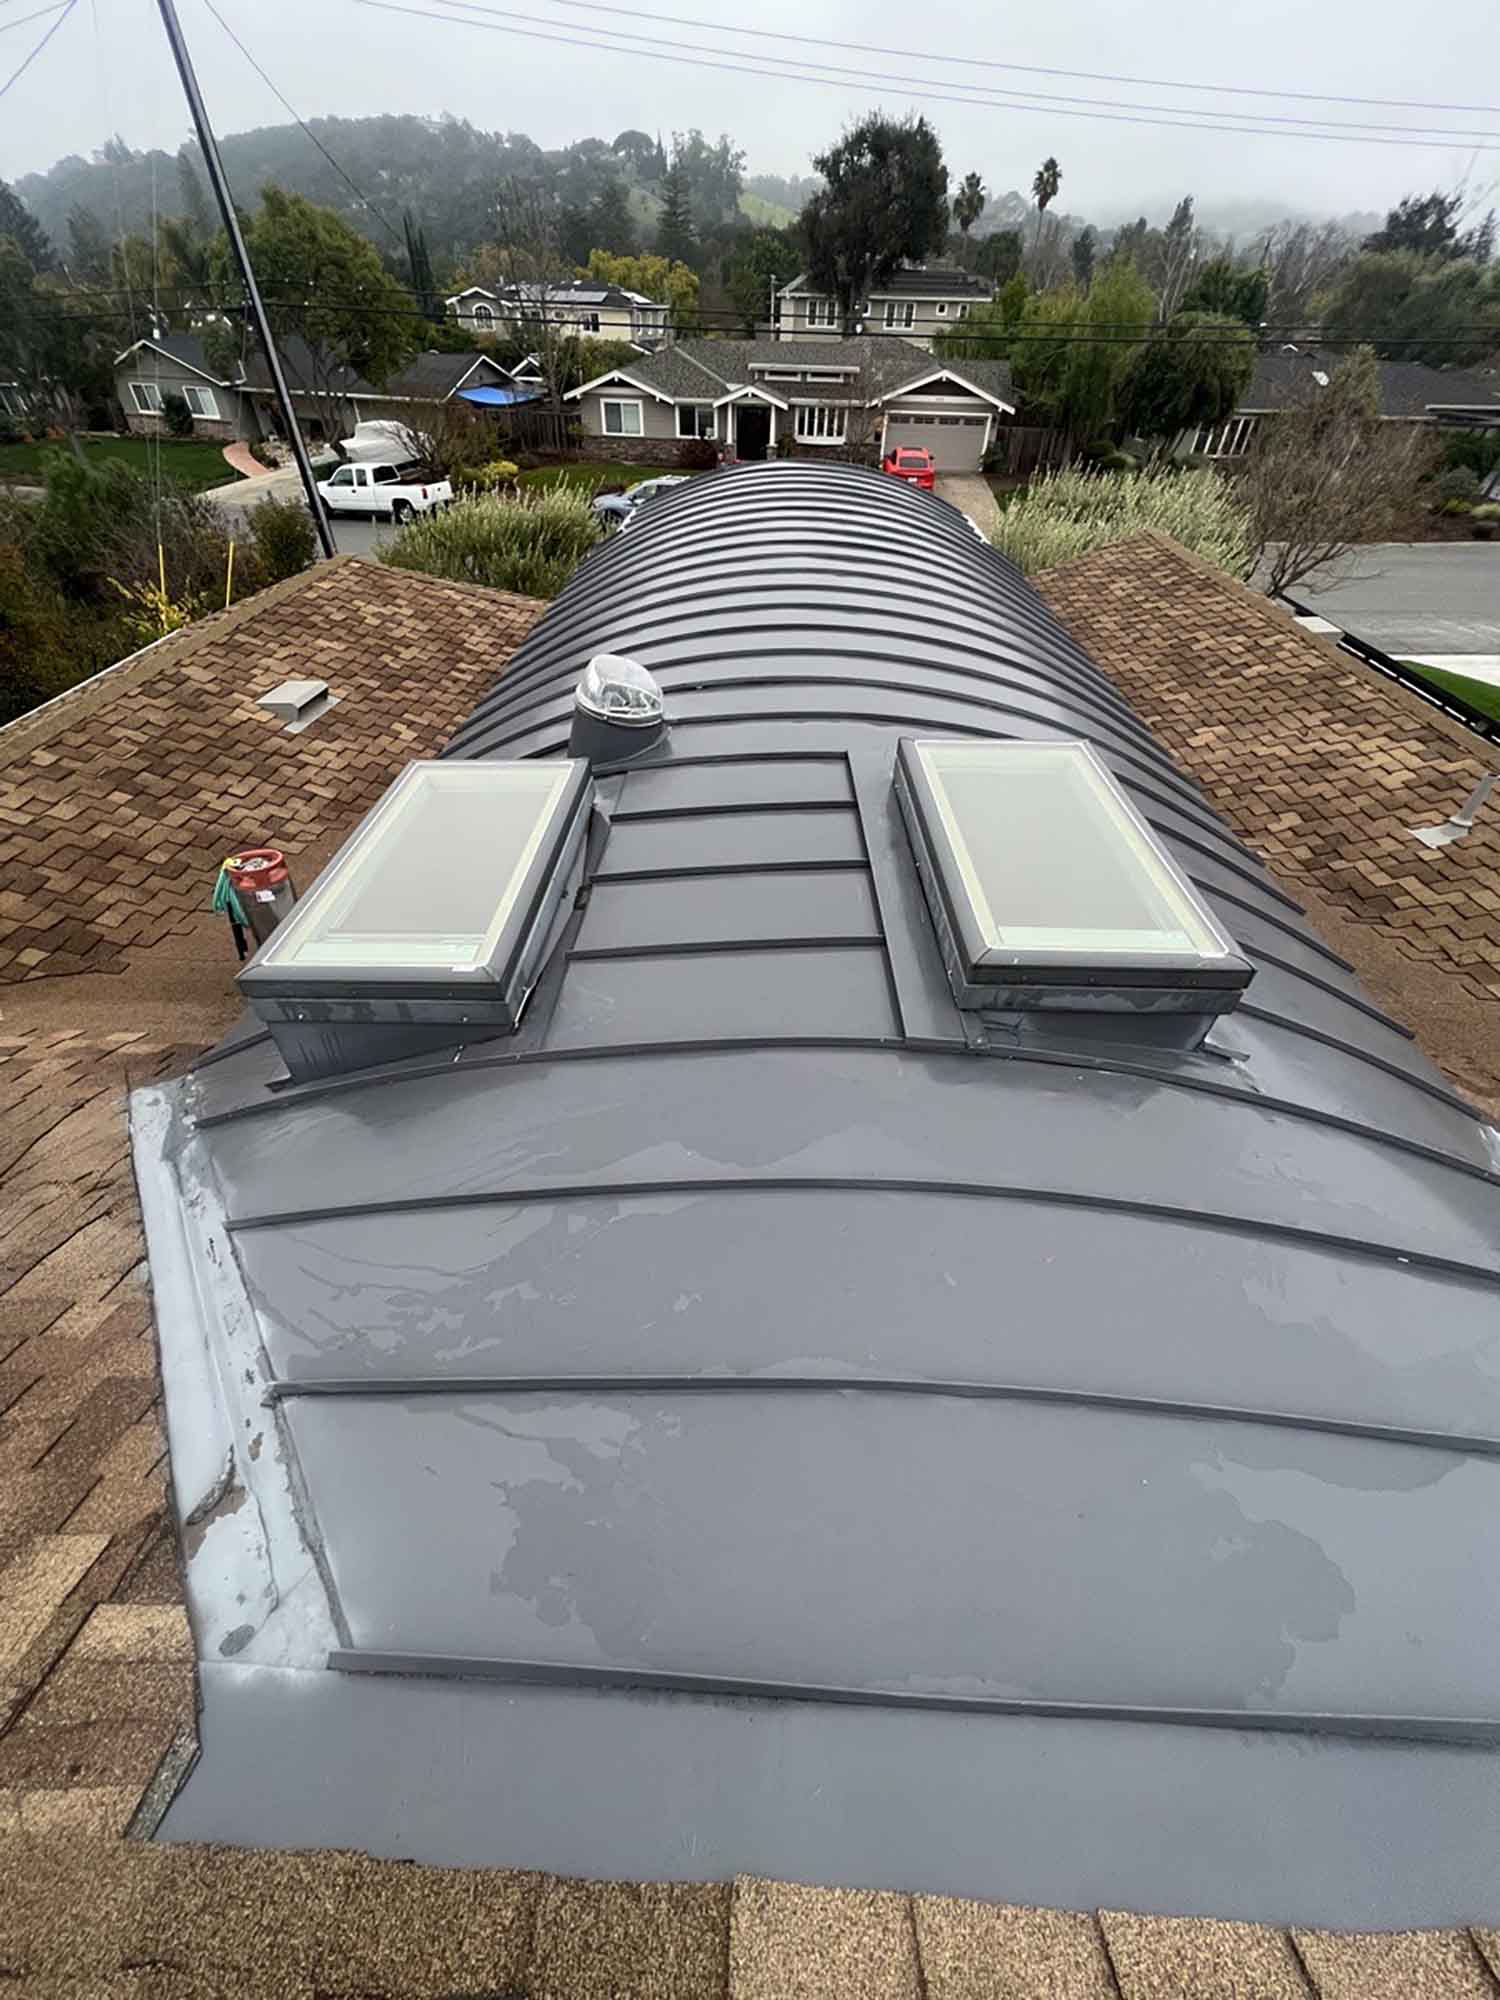 ClimatePro Installs 3M Sun Control Window Film in a Los Gatos, CA Home